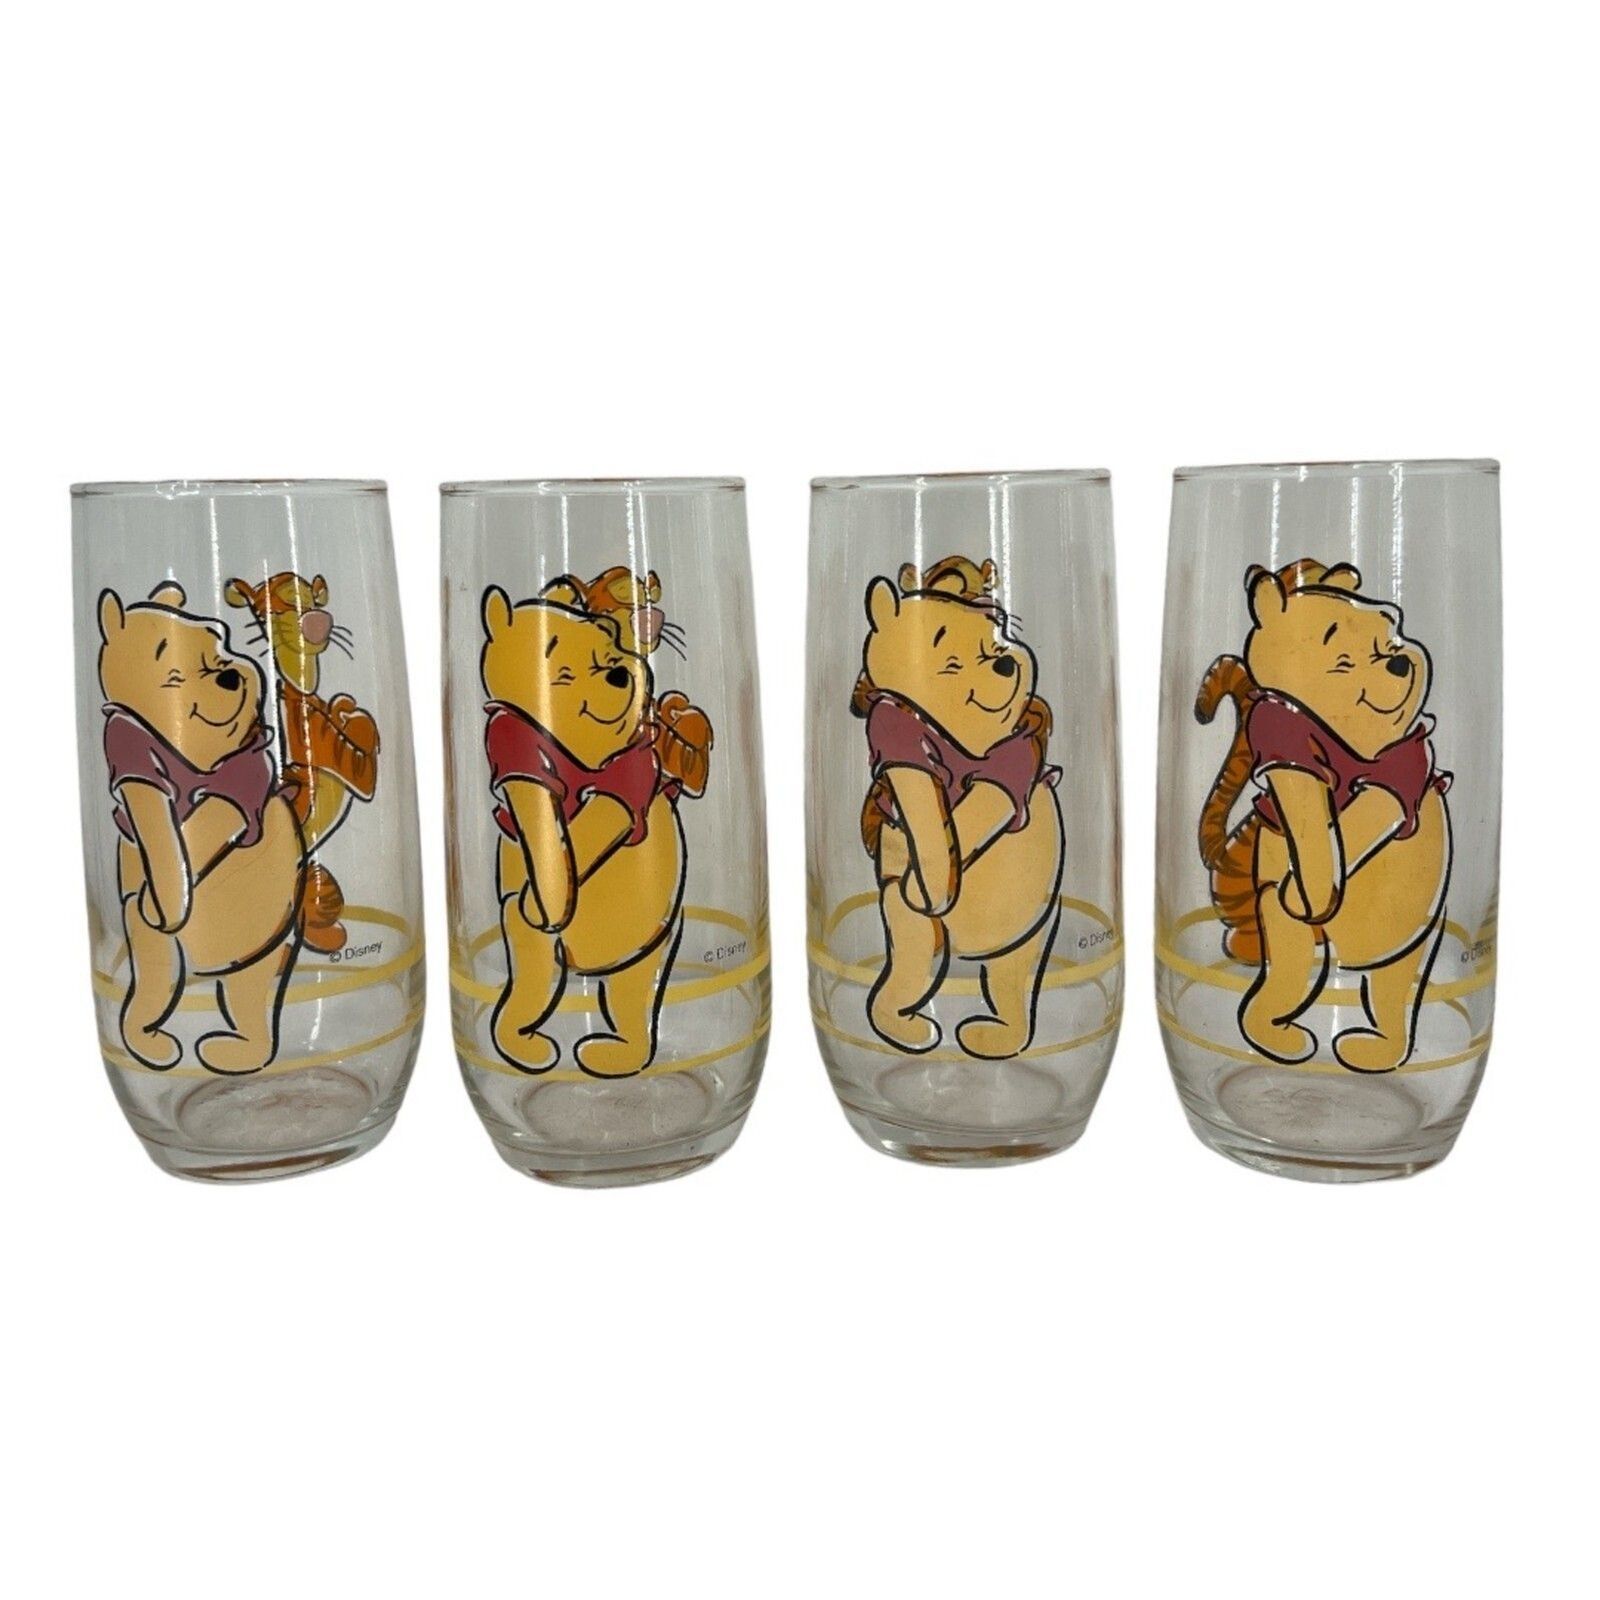 Disney Winnie The Pooh Tigger glasses set of 4 glass cups - $27.72